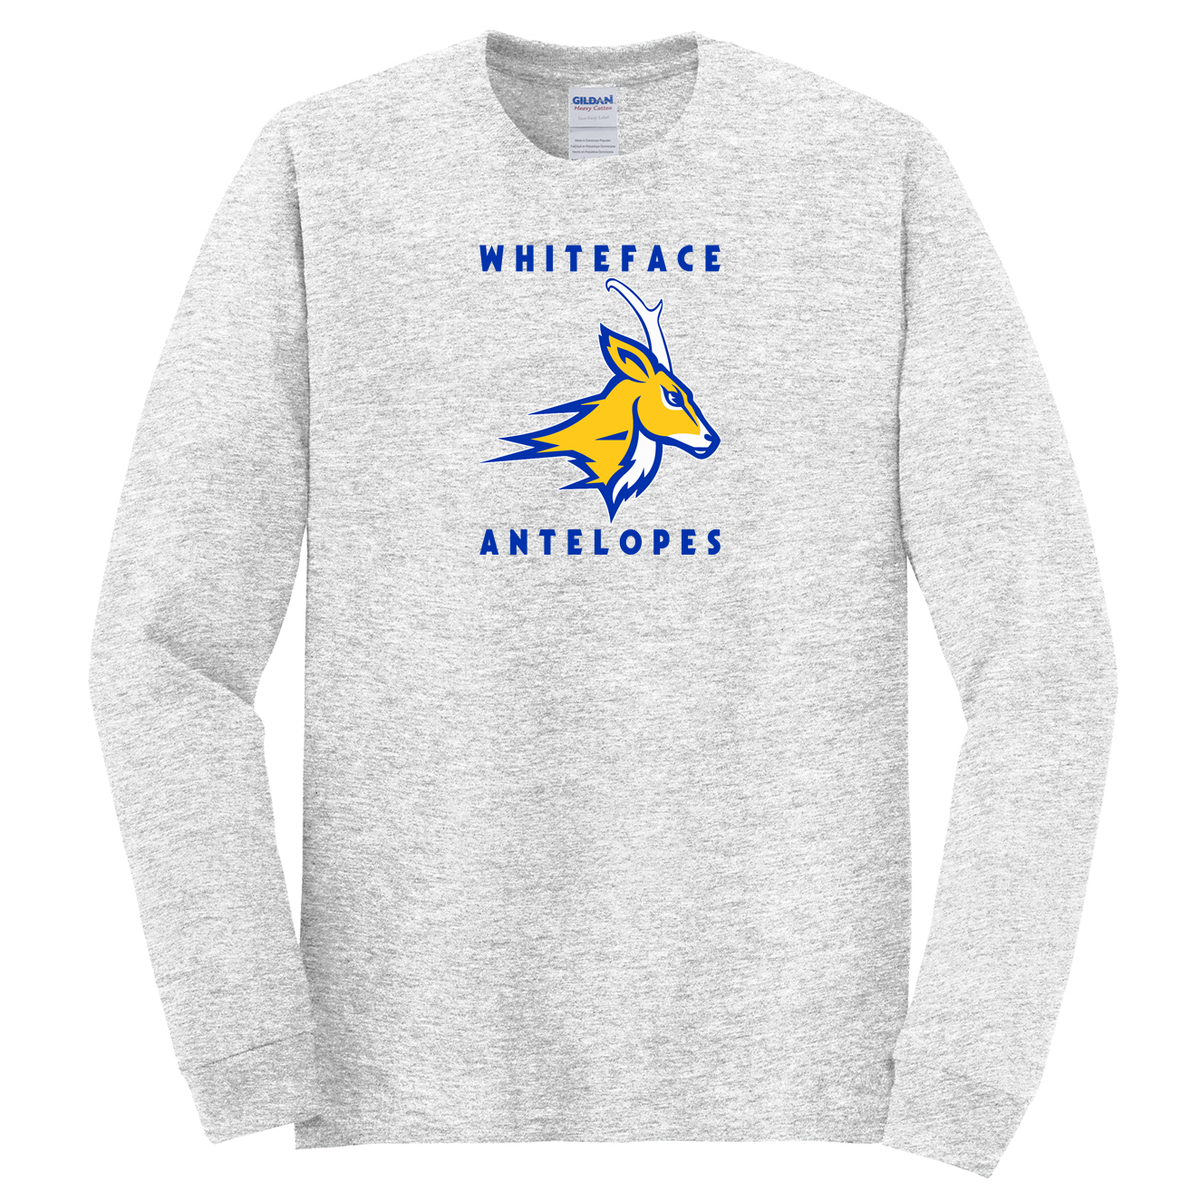 Whiteface Antelopes Cotton Long Sleeve Shirt